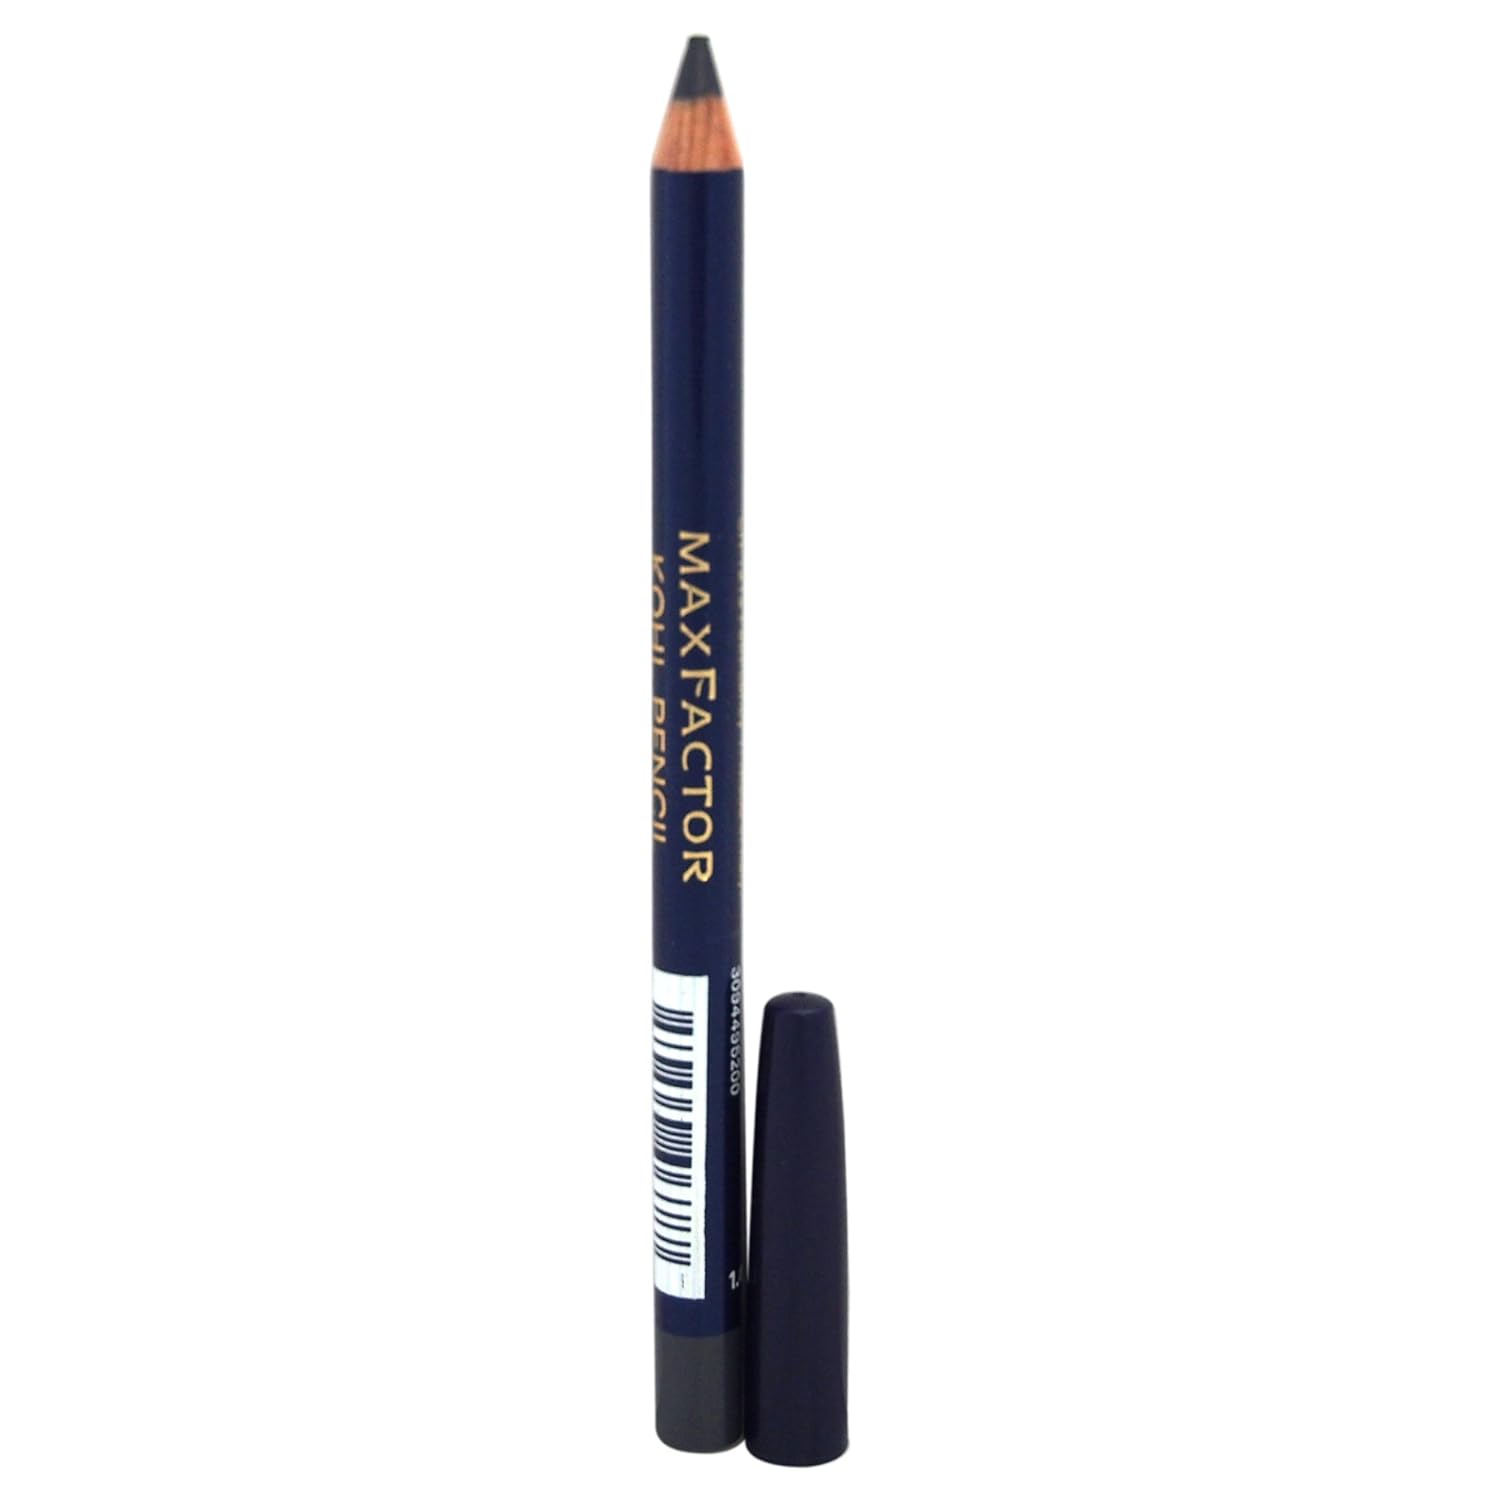 Max Factor Kohl Pencil No. 050 Eye Liner, Charcoal Grey